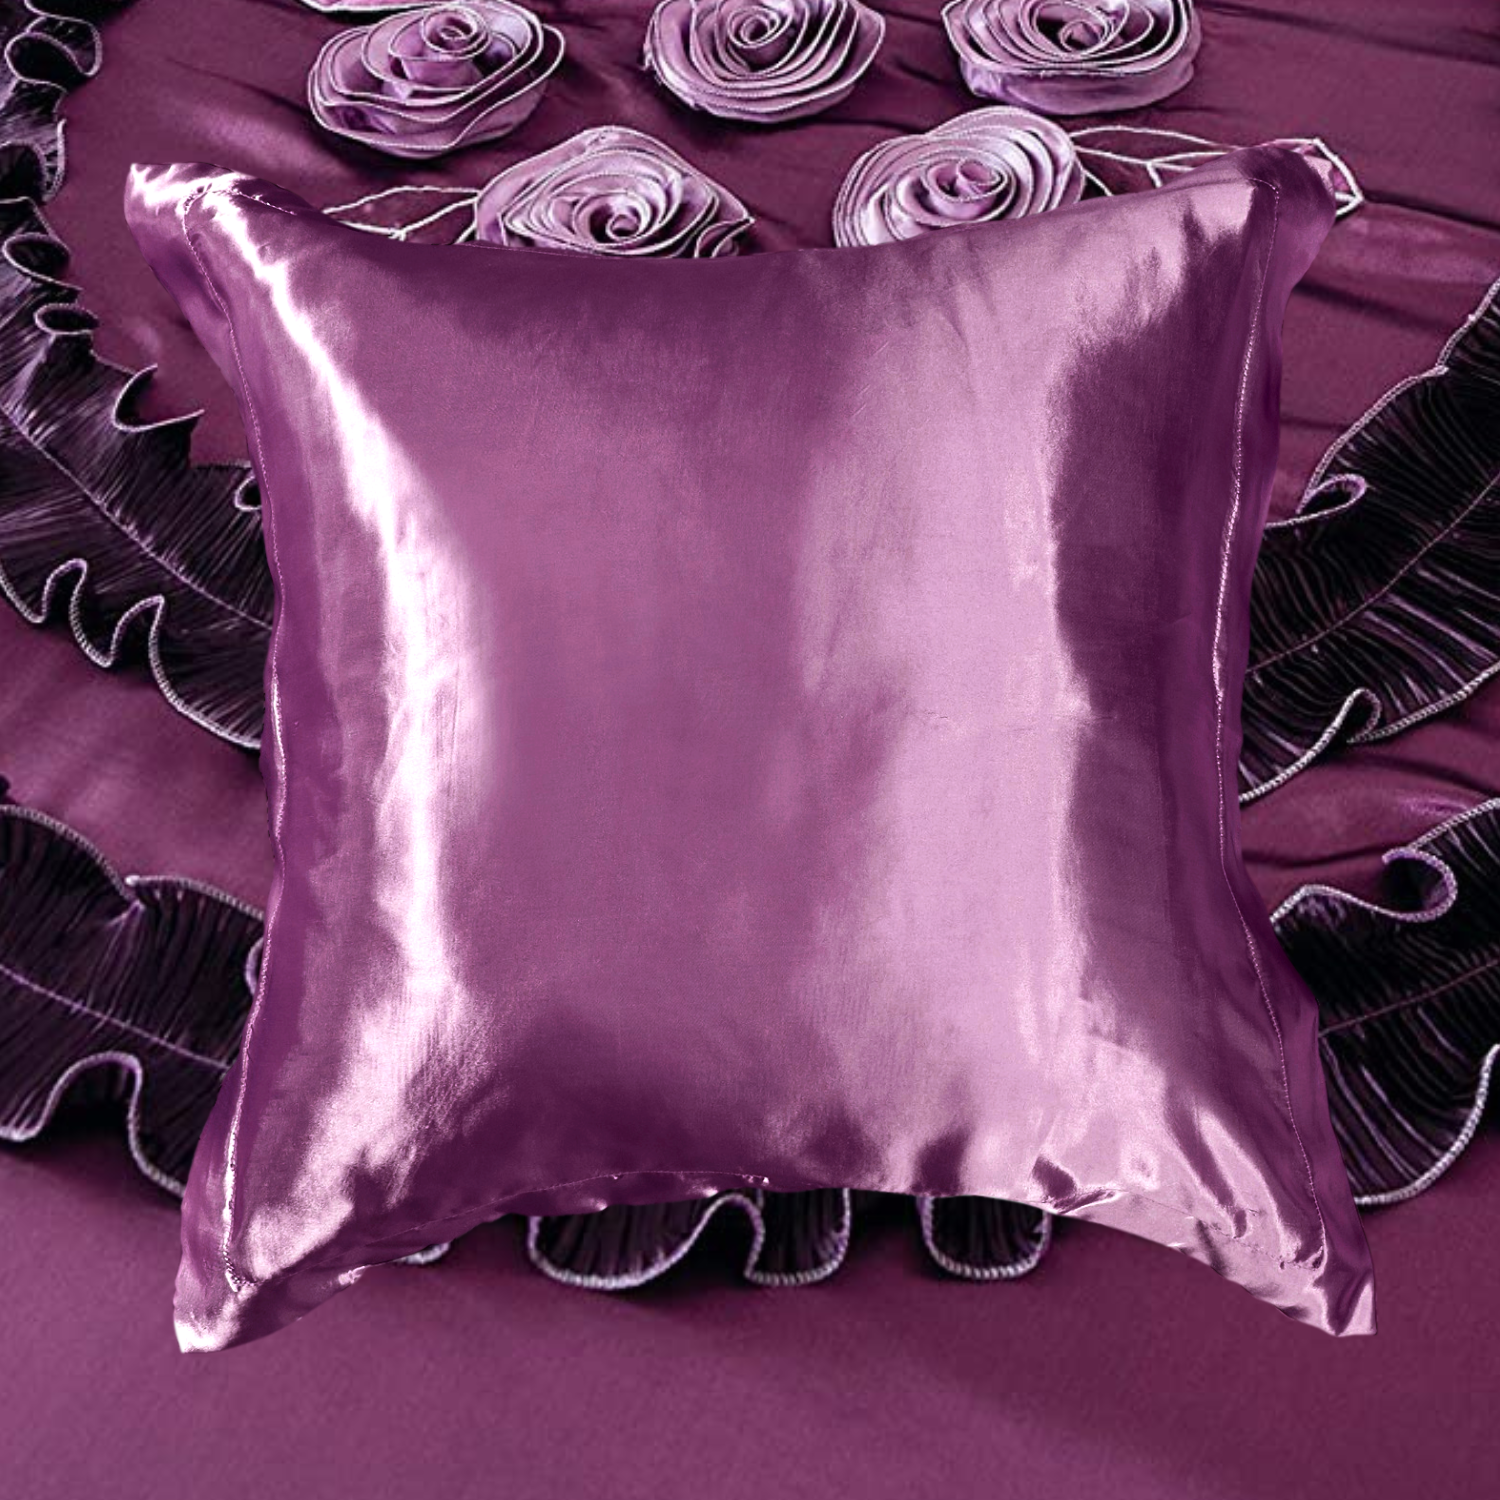 Tache Satin Ruffle Dark Purple Midnight Bloom Euro Sham (BM6438) - Tache Home Fashion